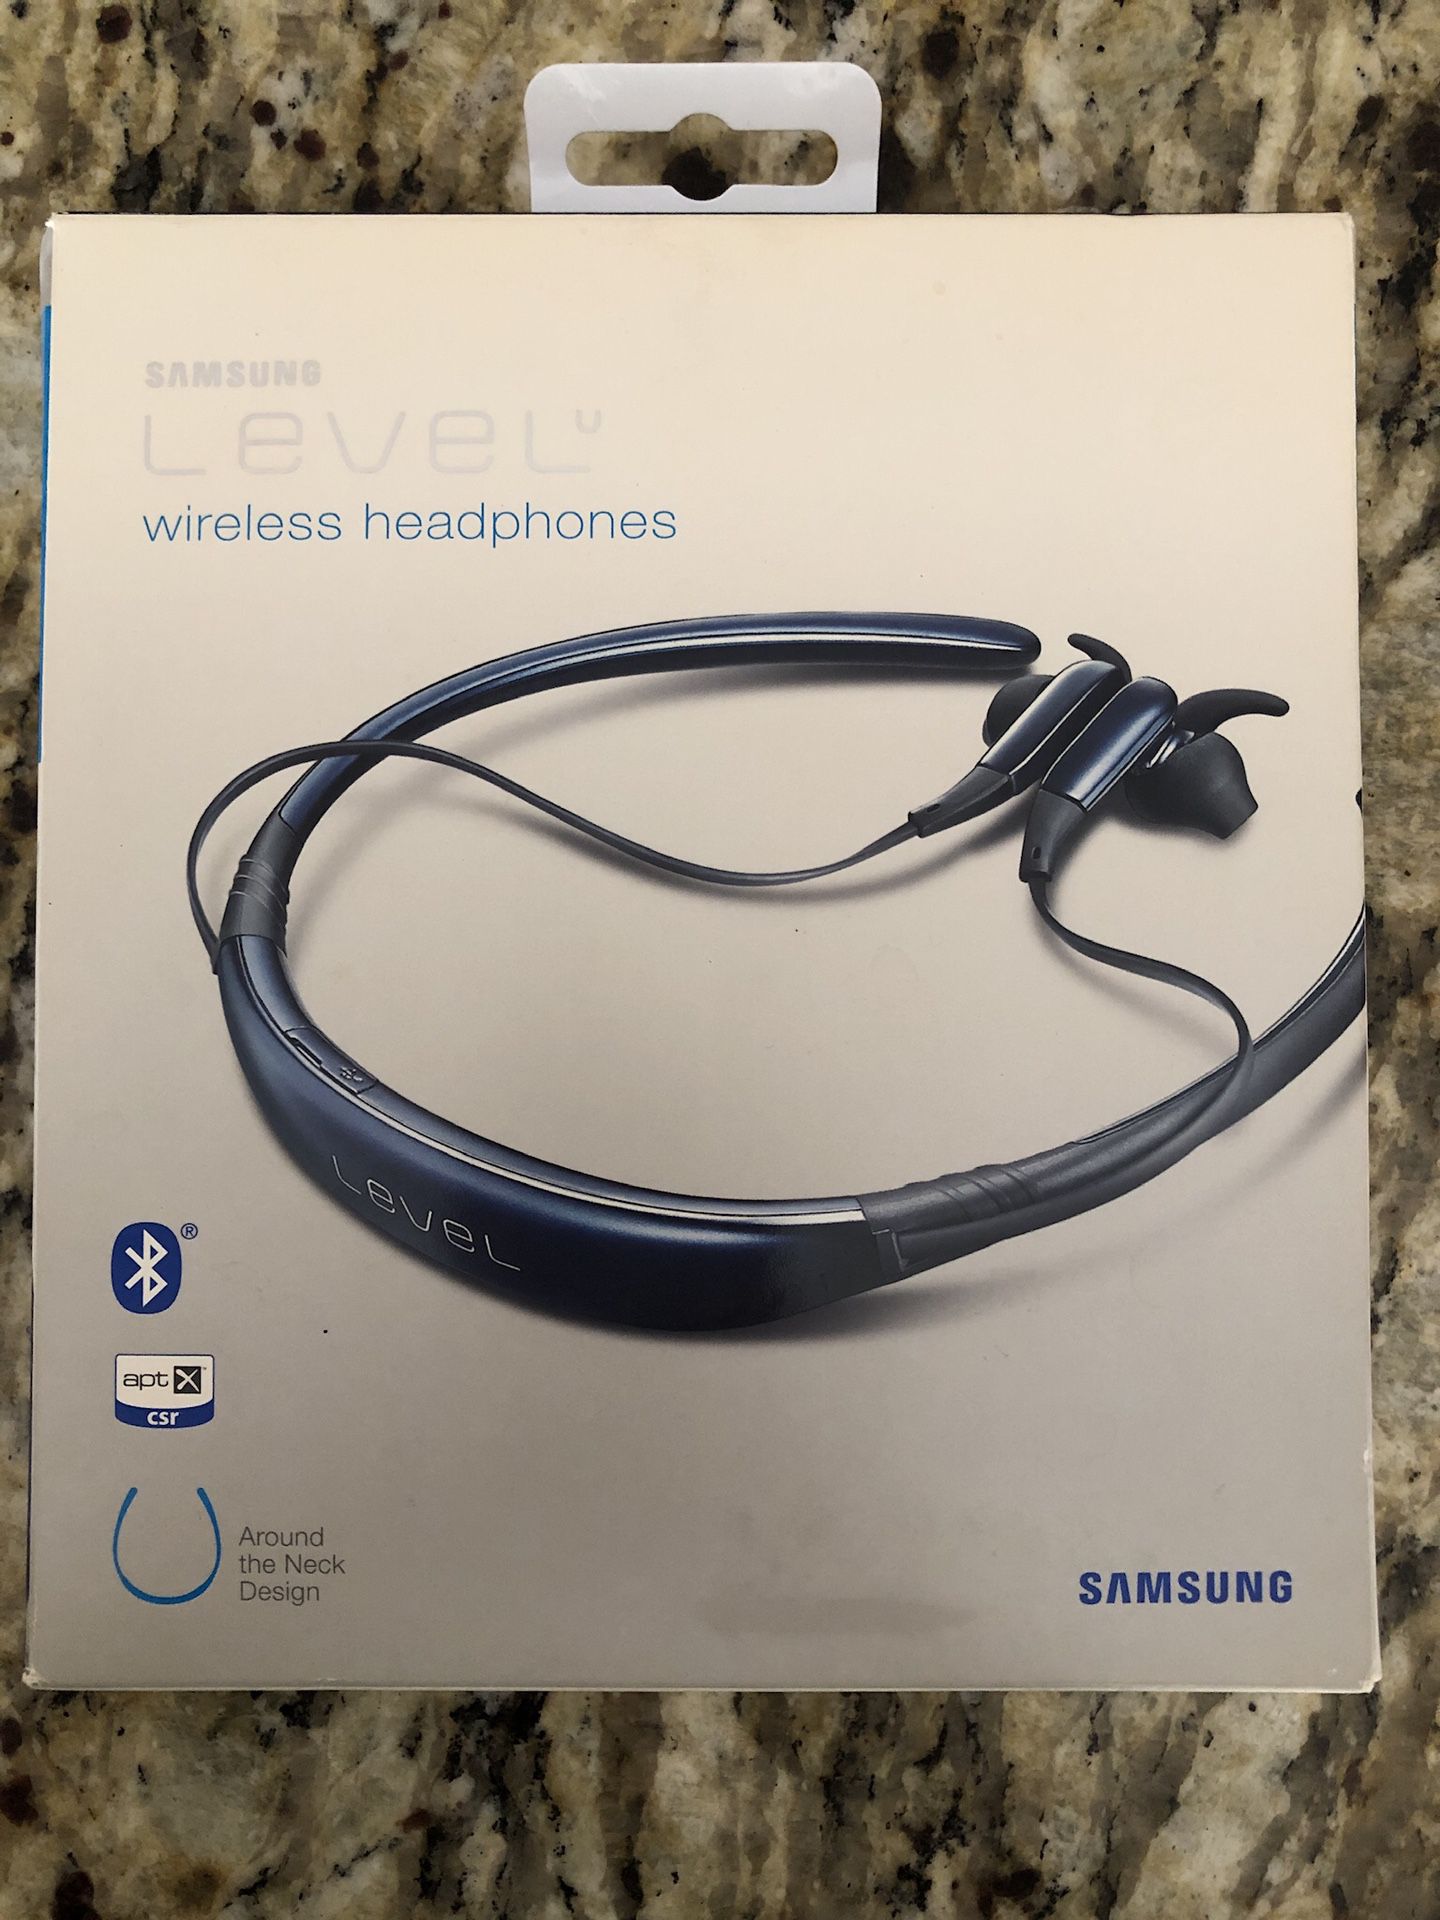 Samsung wireless headphones - Never opened